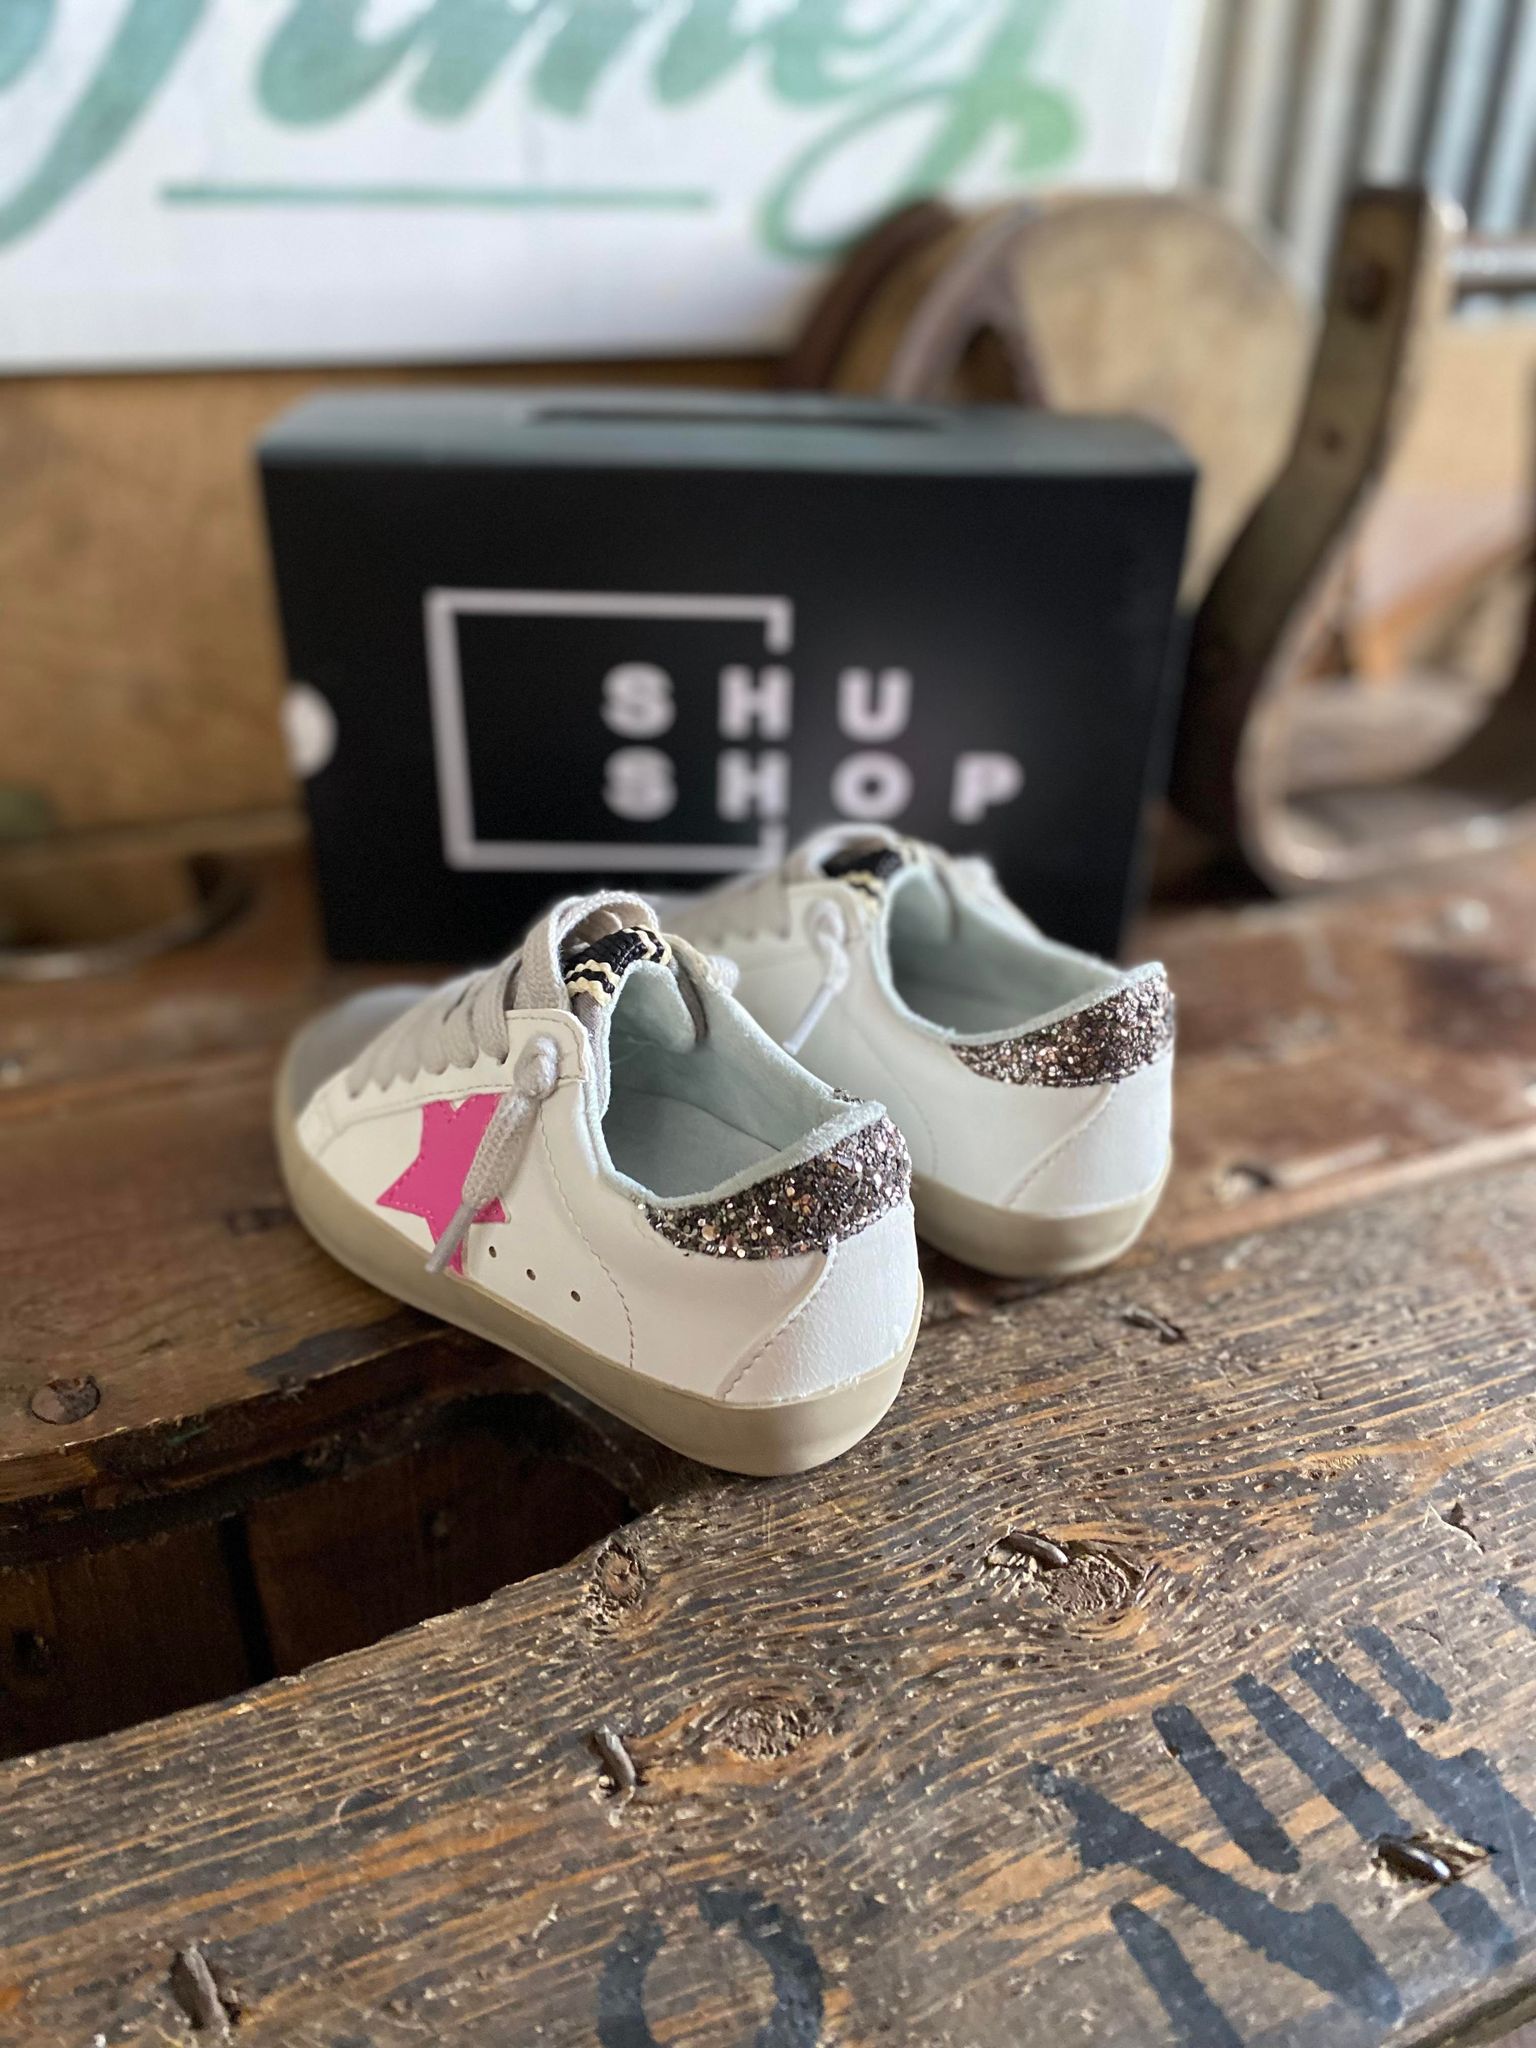 Paris Toddler Sneaker in Light Grey By Shu Shop-Kids Casual Shoes-Shu Shop-Lucky J Boots & More, Women's, Men's, & Kids Western Store Located in Carthage, MO